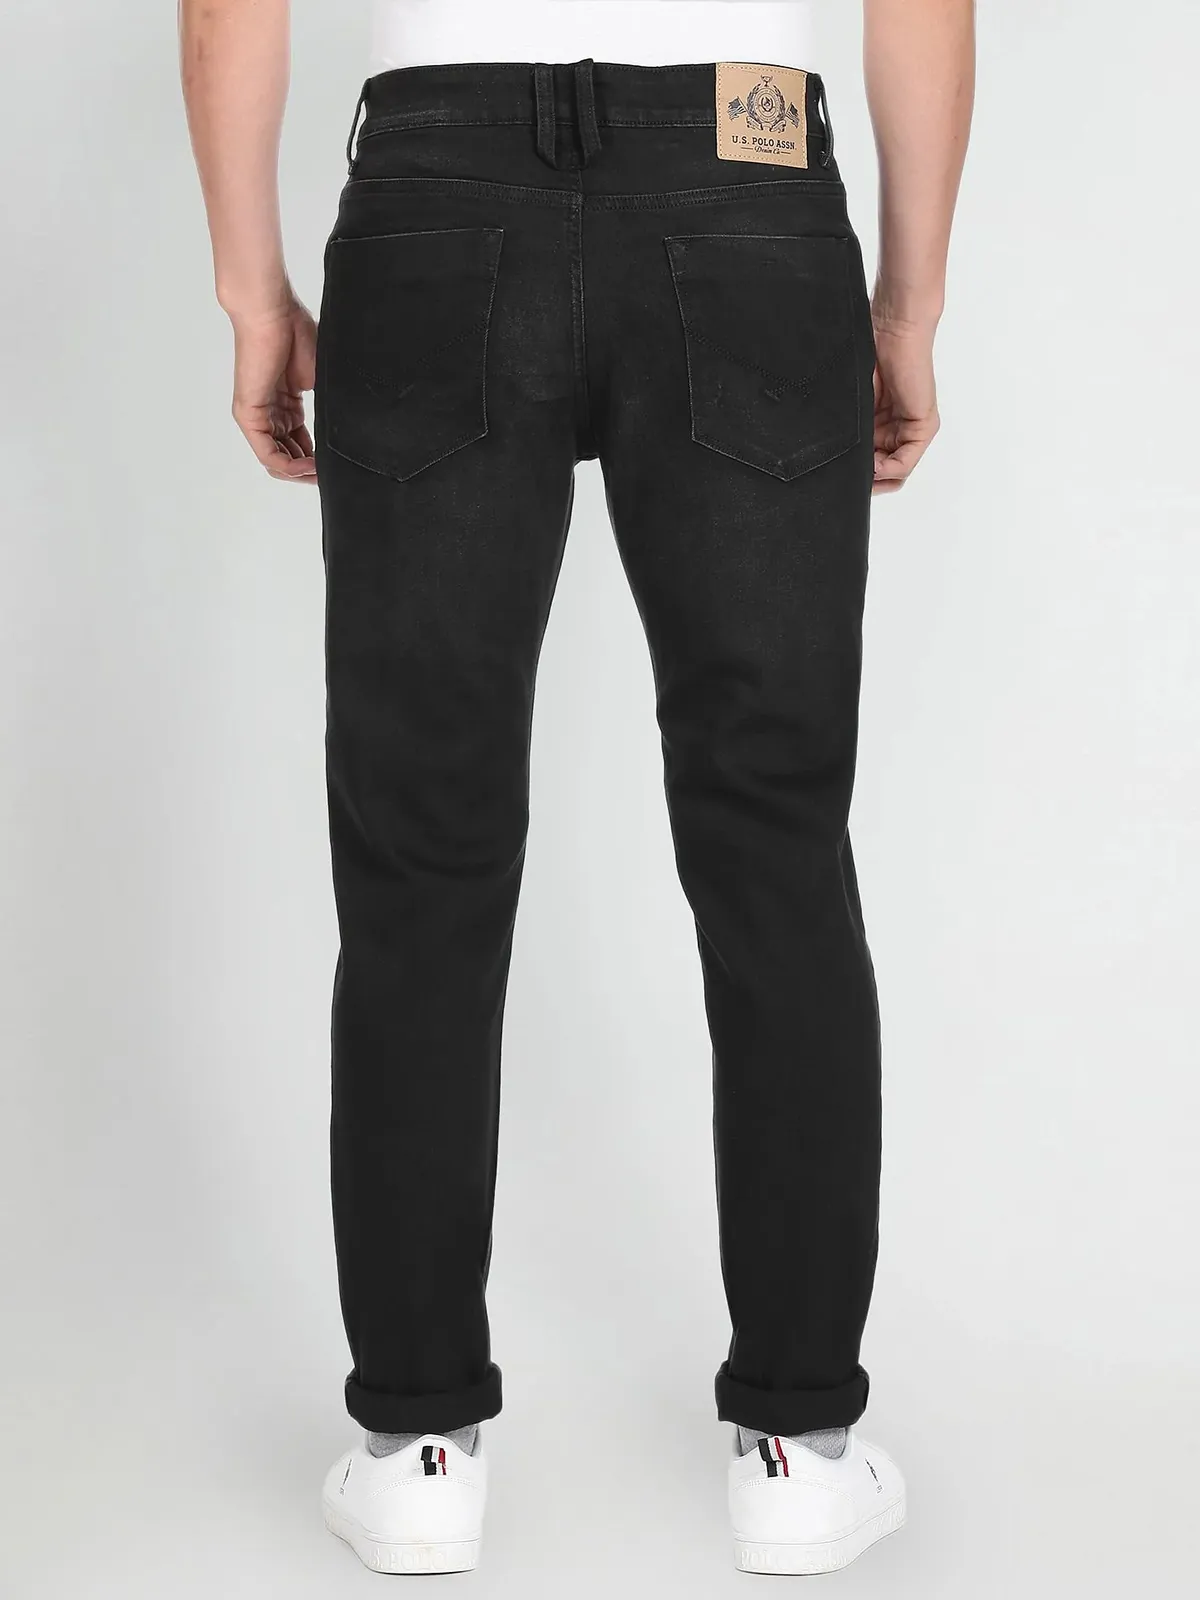 U S POLO ASSN black solid slim taper jeans